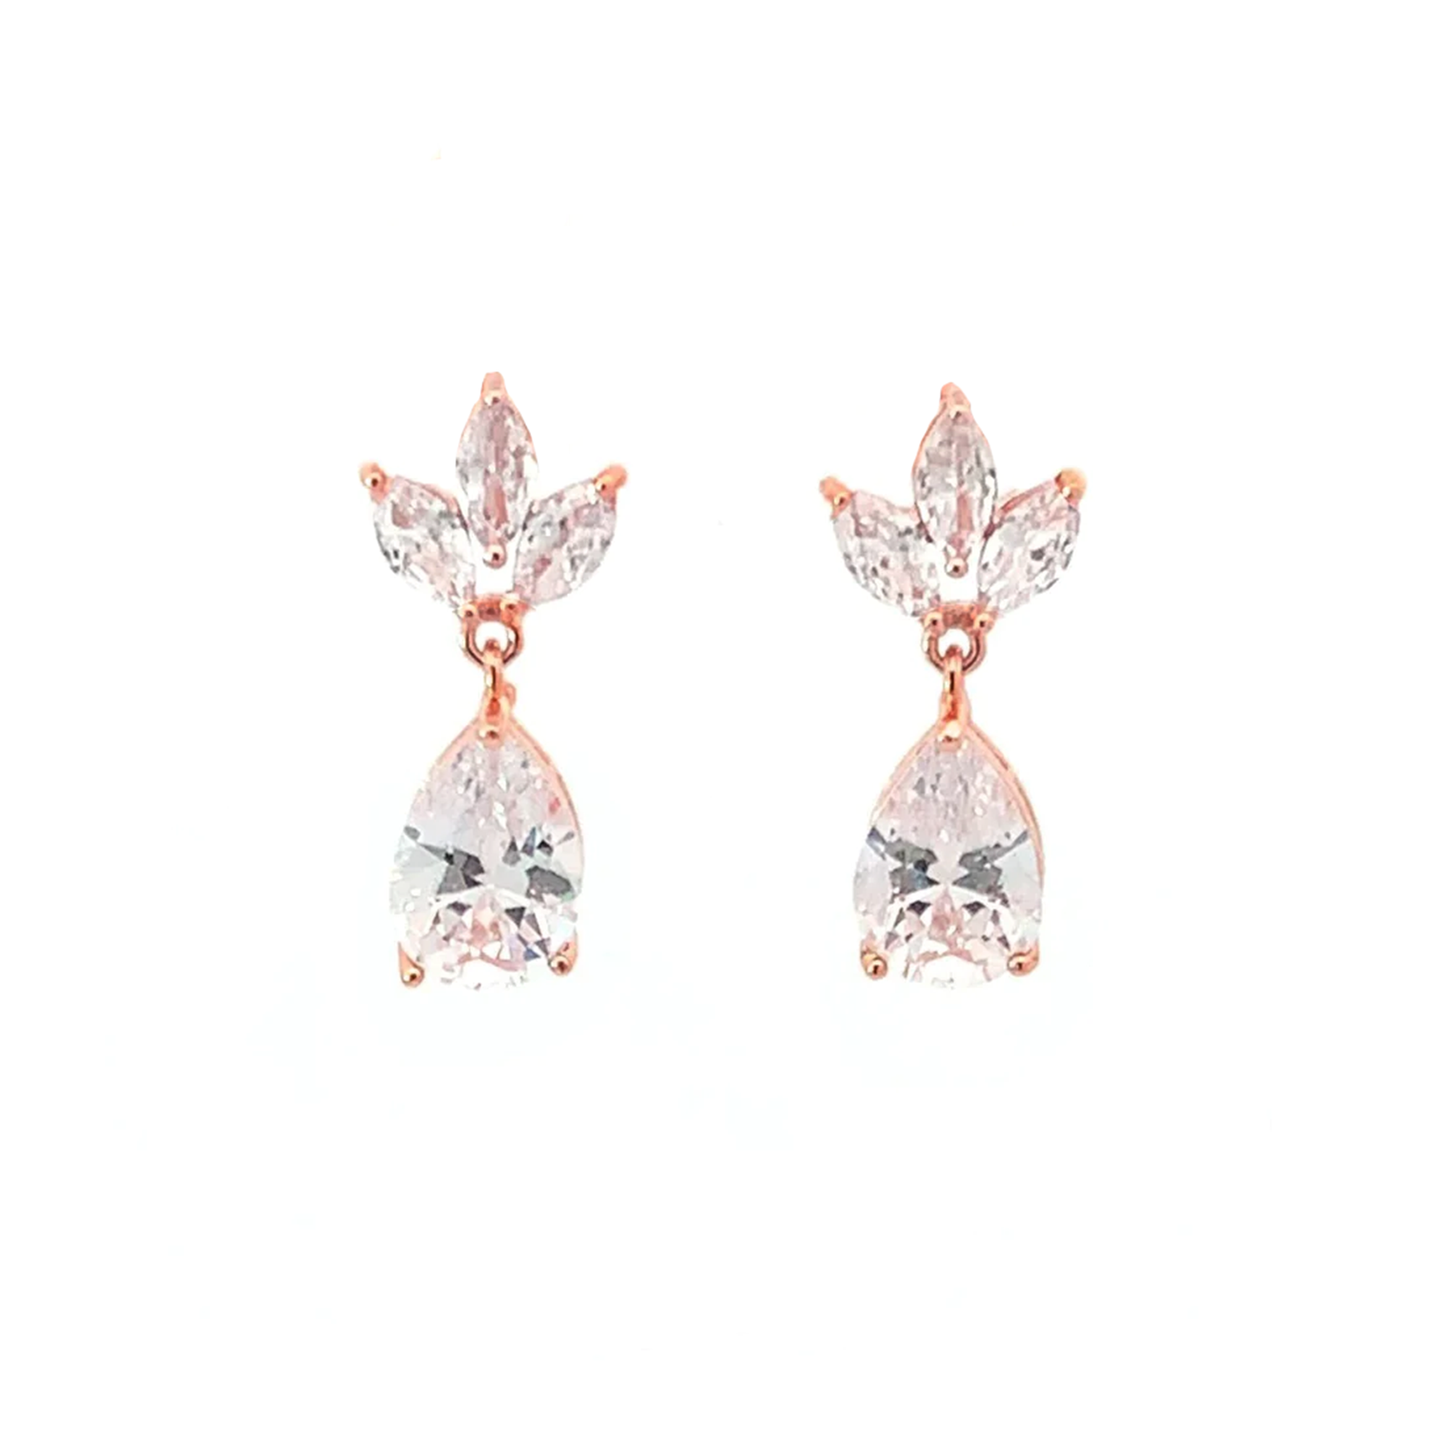 crystal teardrop earrings rose gold